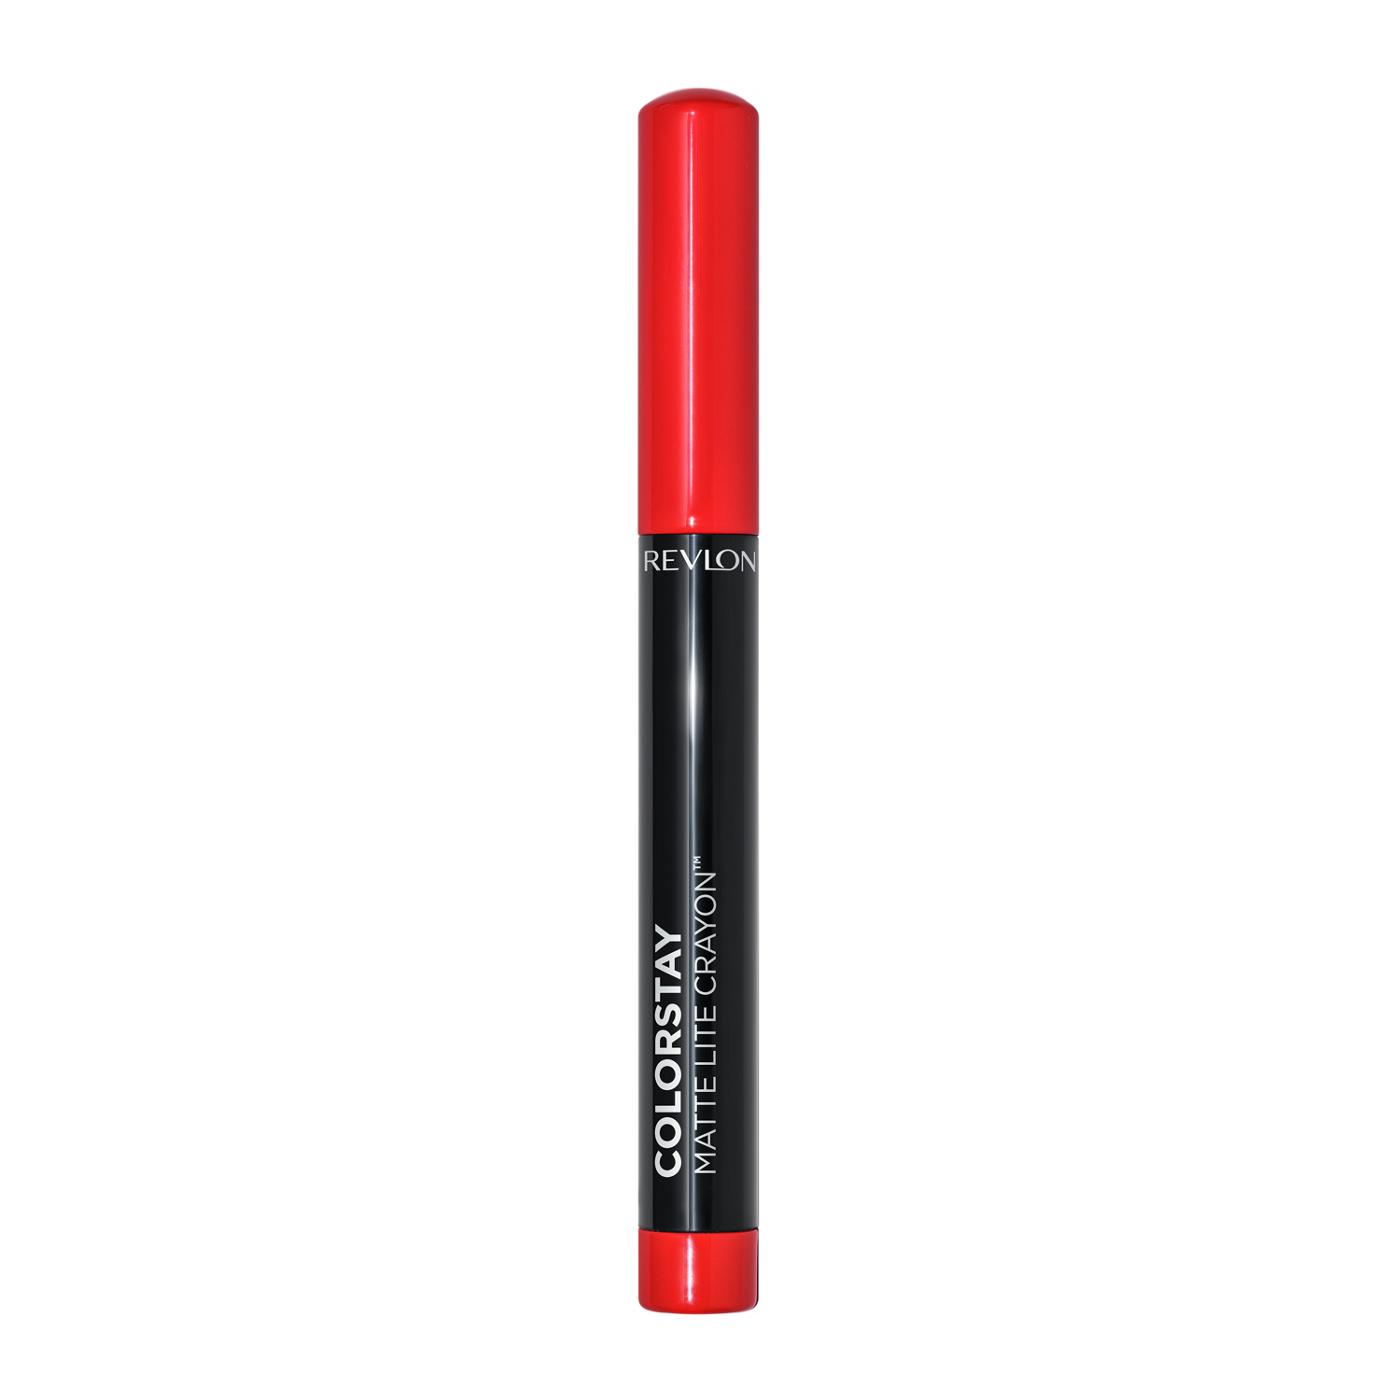 Revlon ColorStay Matte Lite Crayon Lipstick - Ruffled Feathers; image 1 of 7